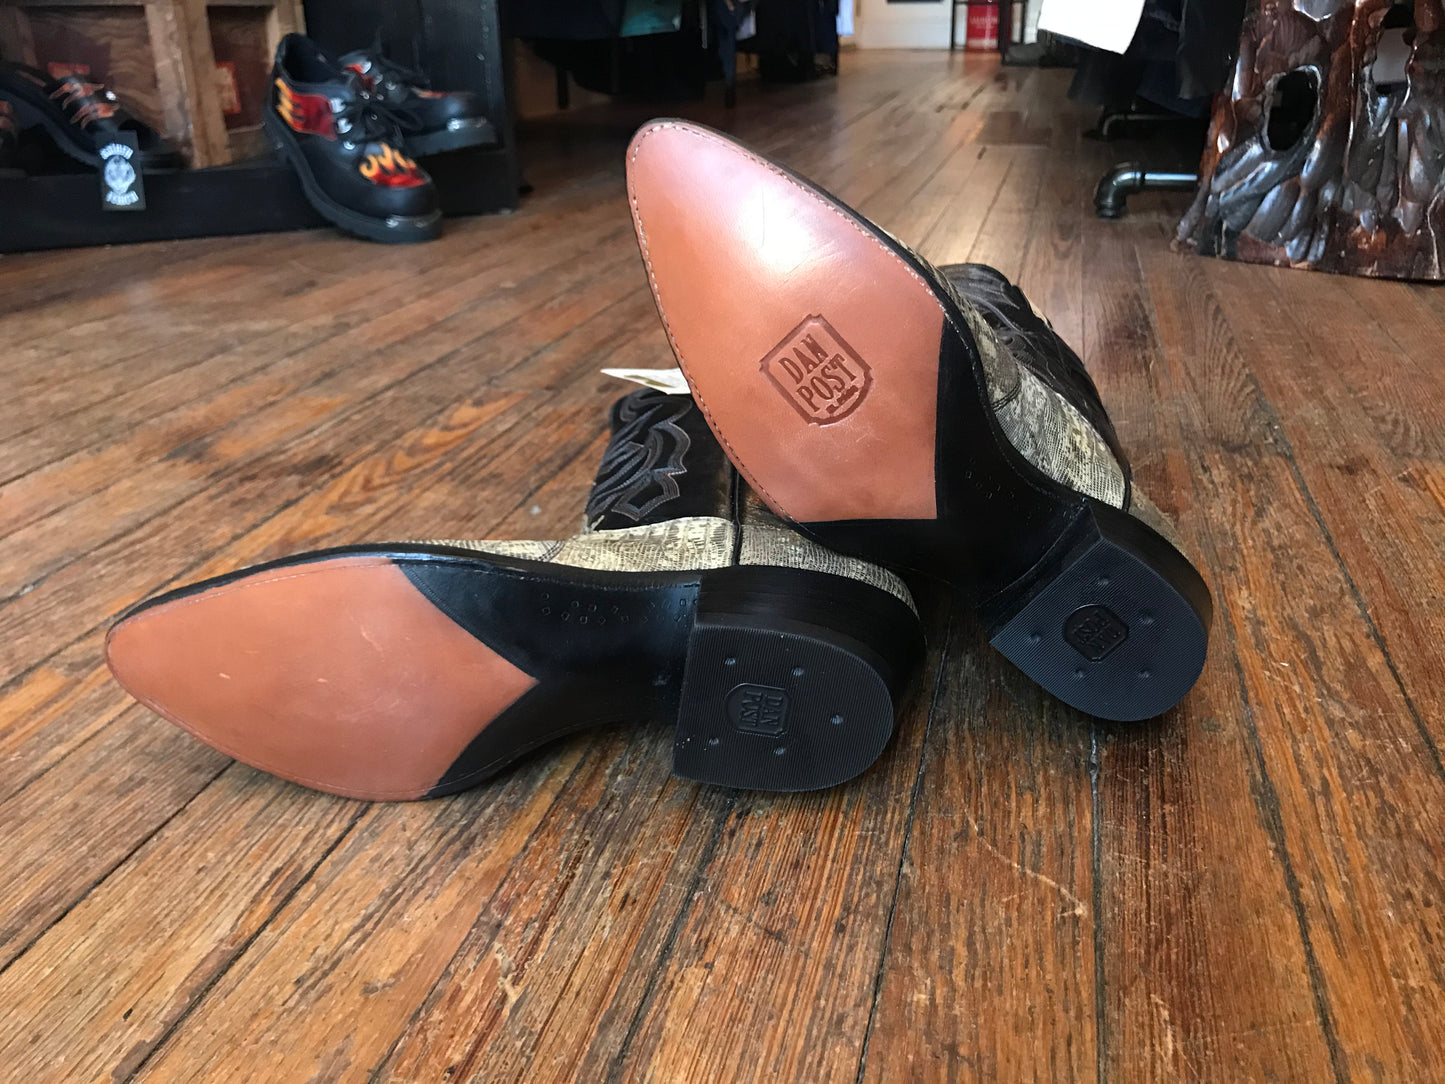 Vintage Dan Post Snakeskin Leather Cowboy Boots